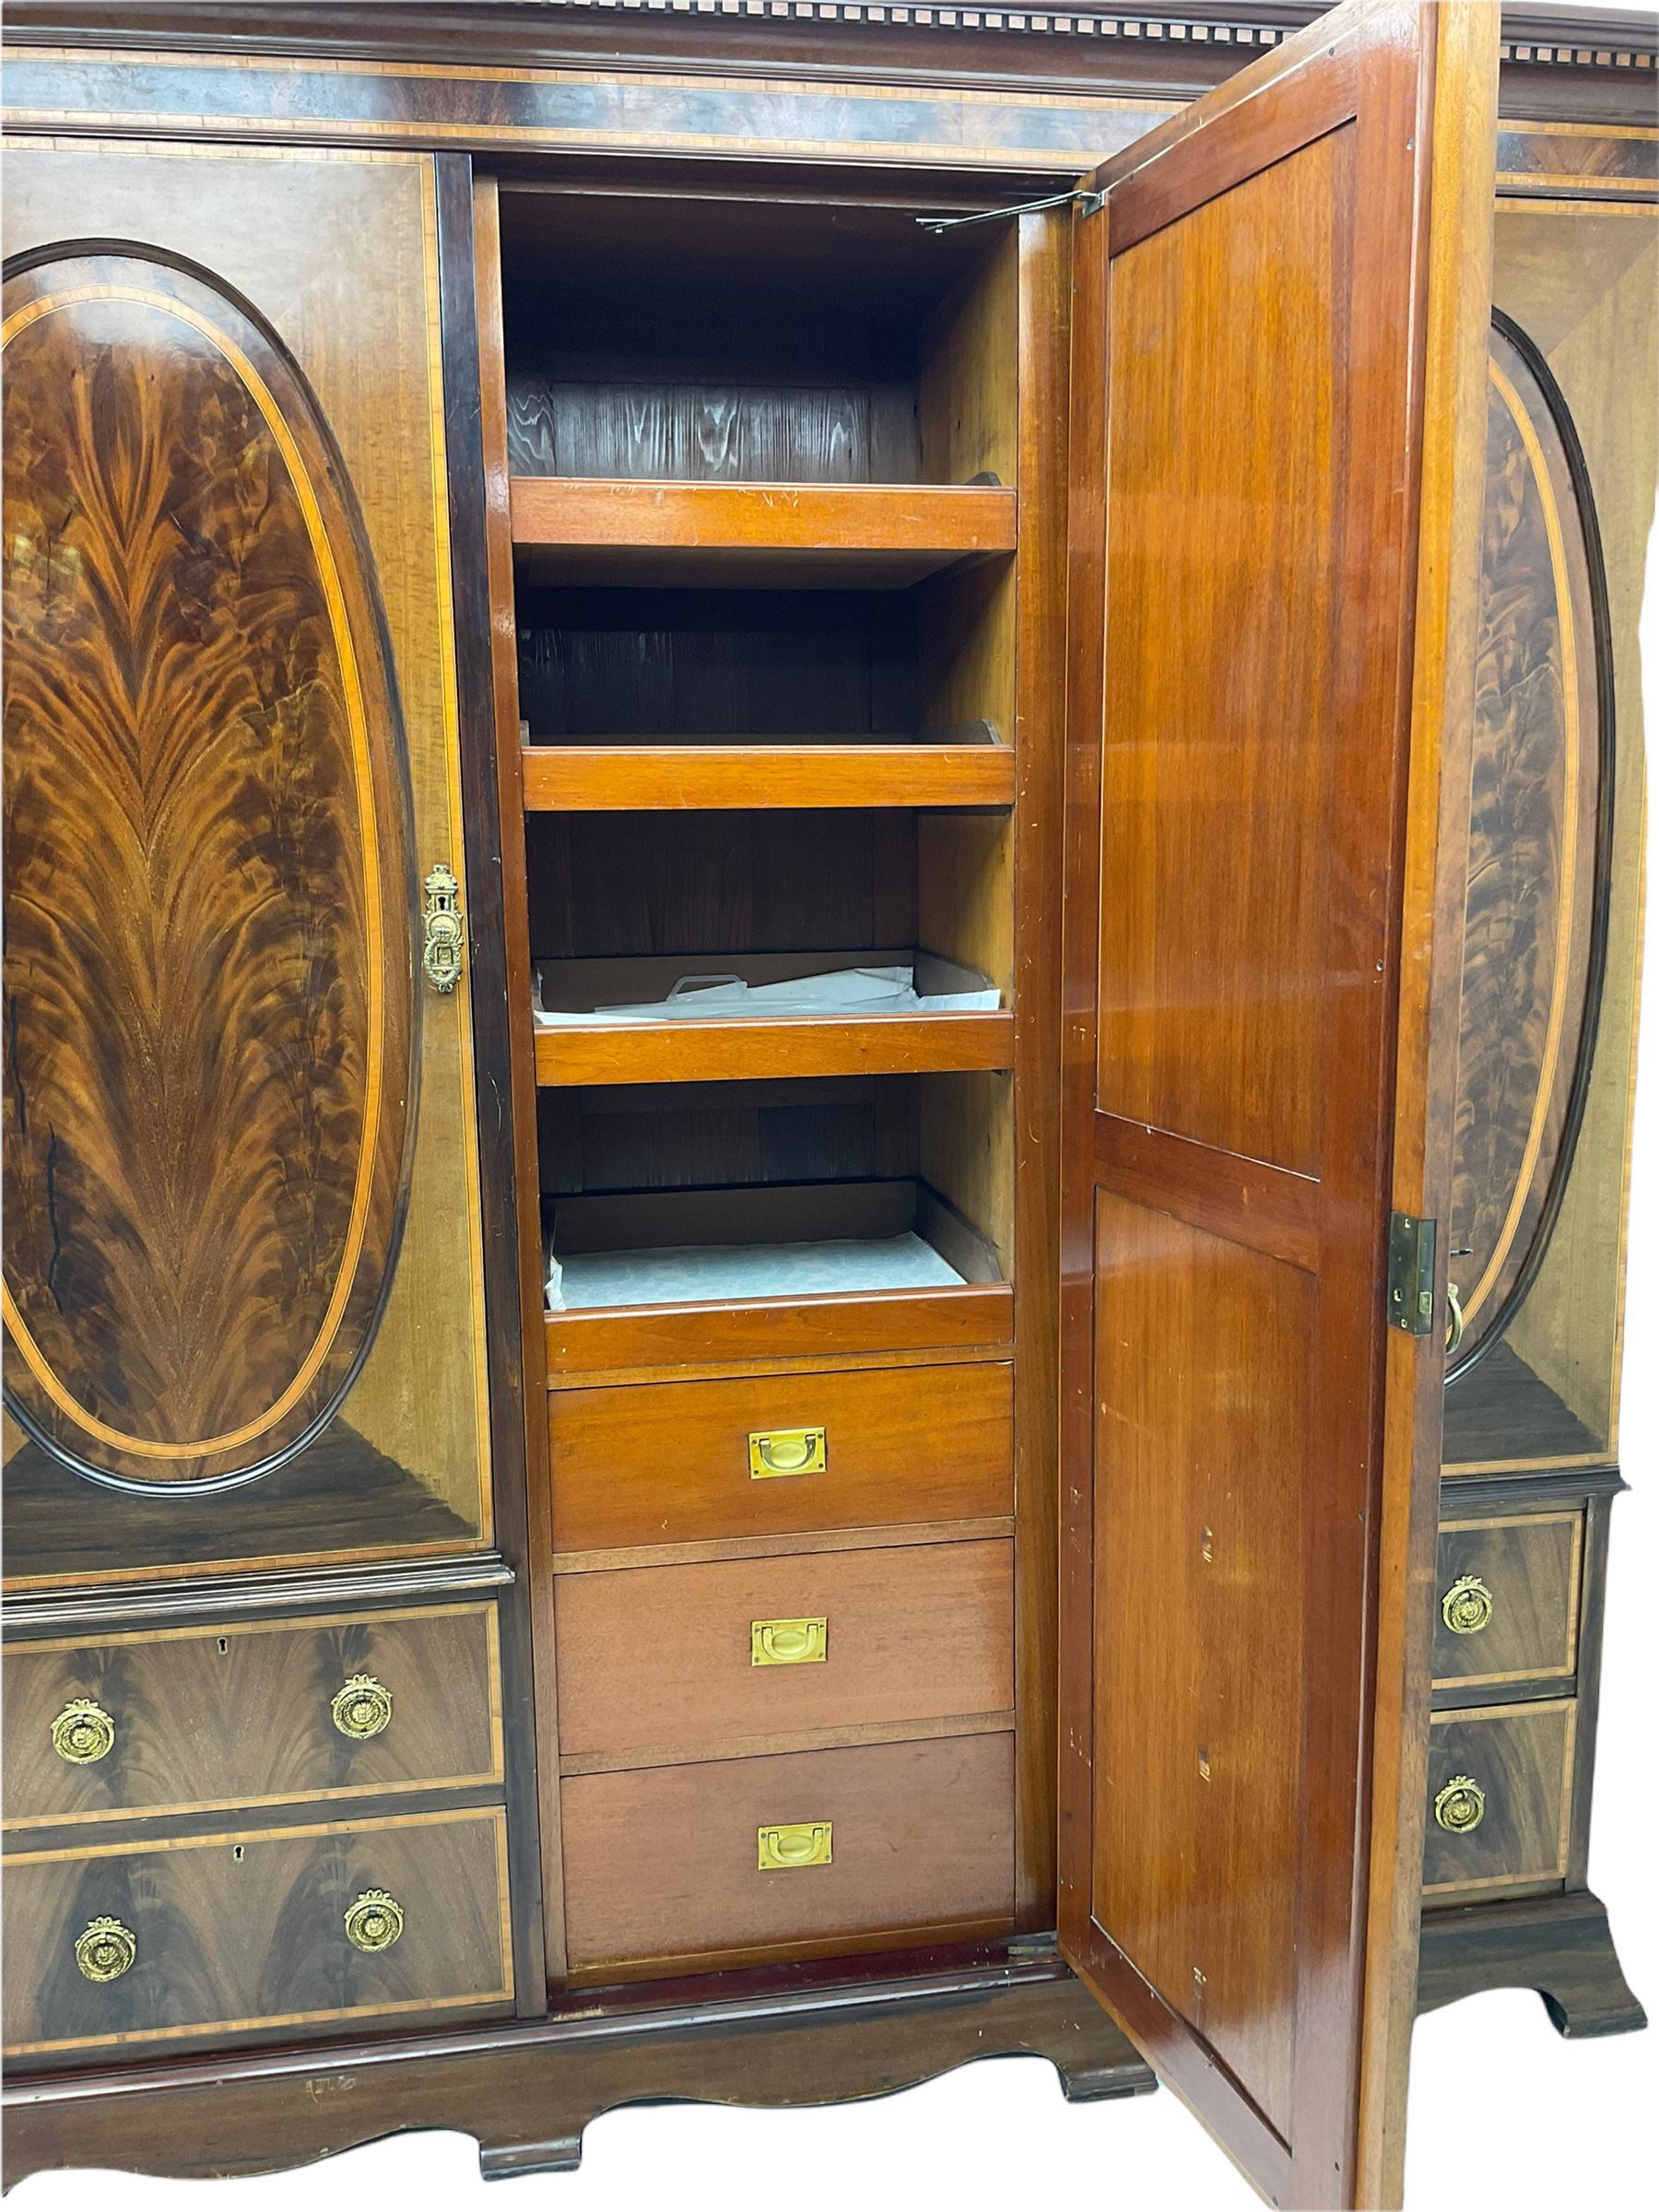 James Shoolbred & Co. London - Edwardian inlaid mahogany triple combination wardrobe - Image 6 of 7